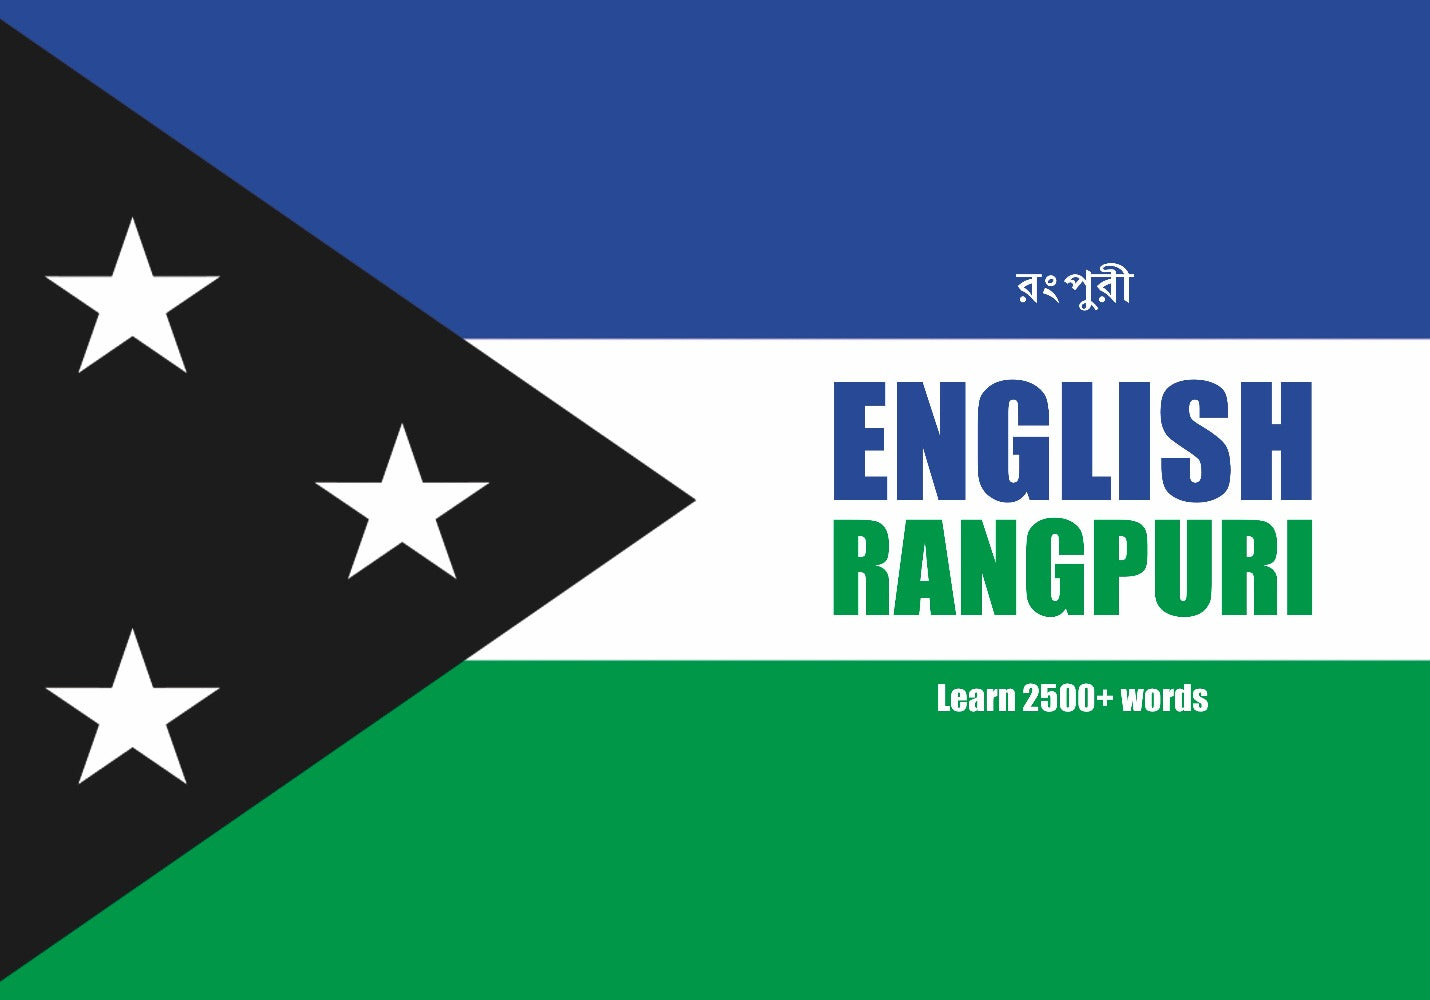 Rangpuri language learning notebook cover